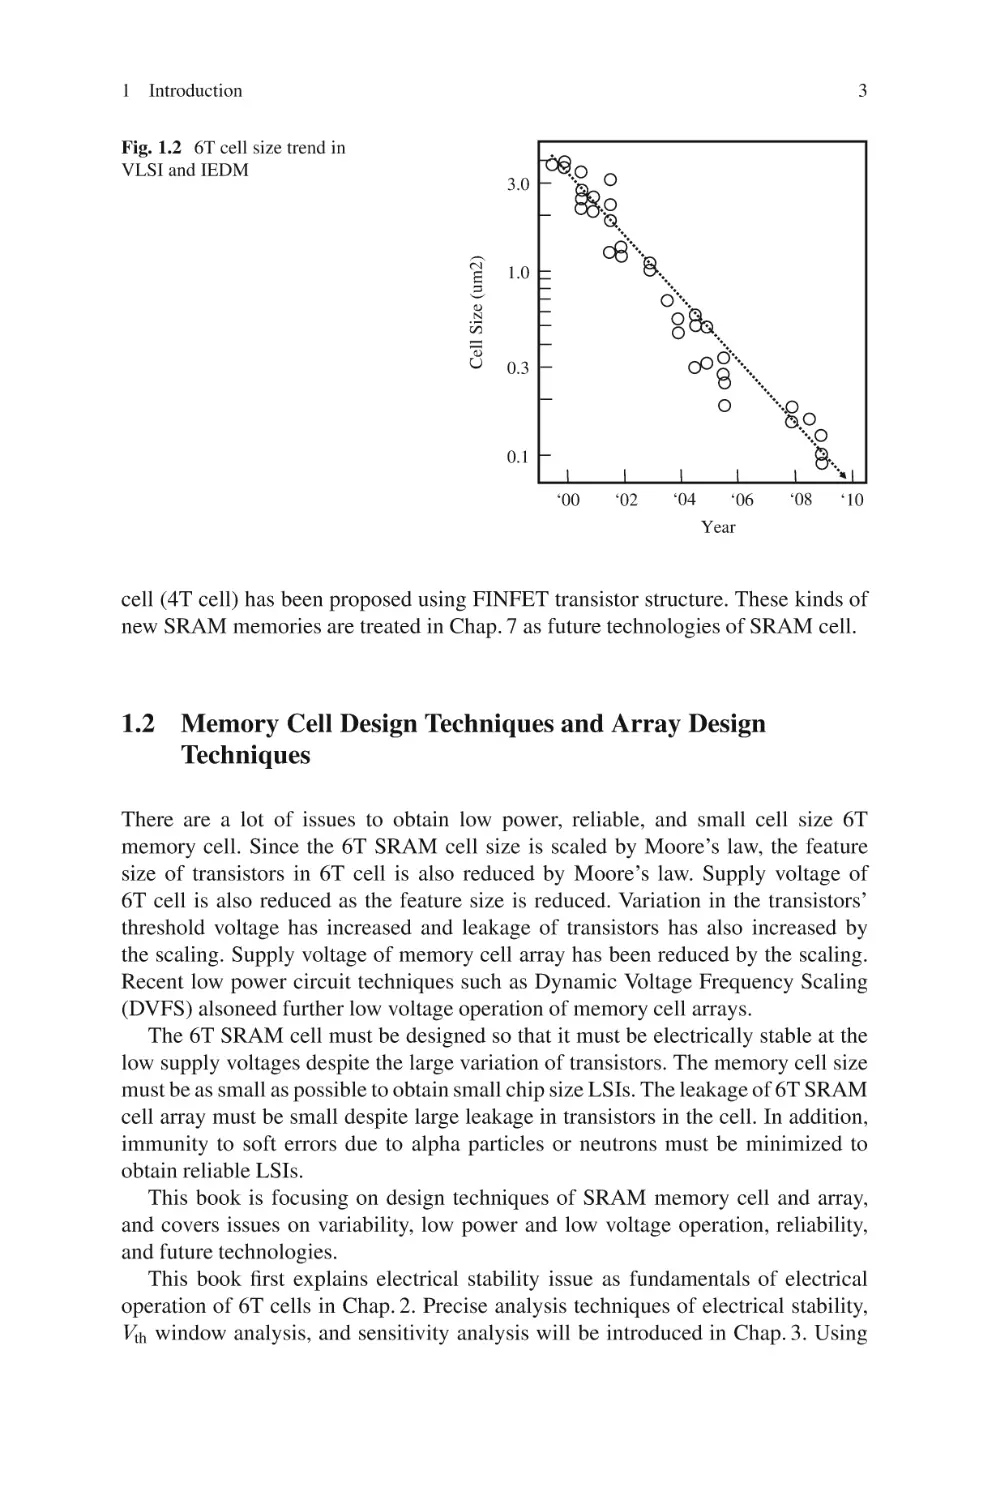 1.2 Memory Cell Design Techniques and Array Design Techniques